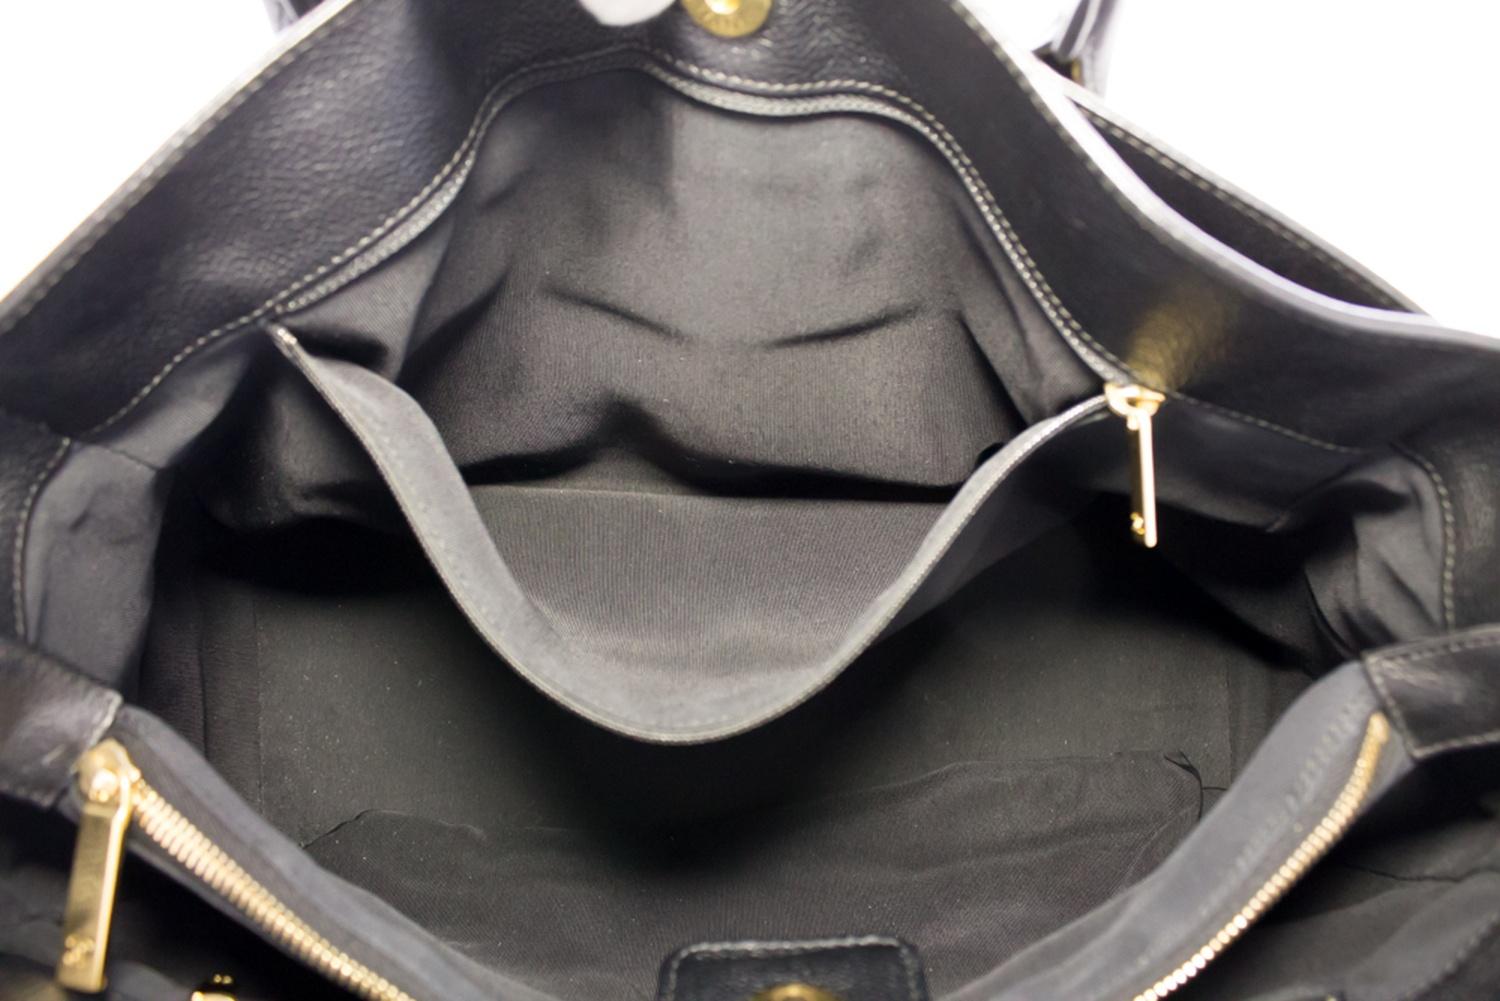 CHANEL Executive Tote Caviar Shoulder Bag Handbag Black Gold Strap 13